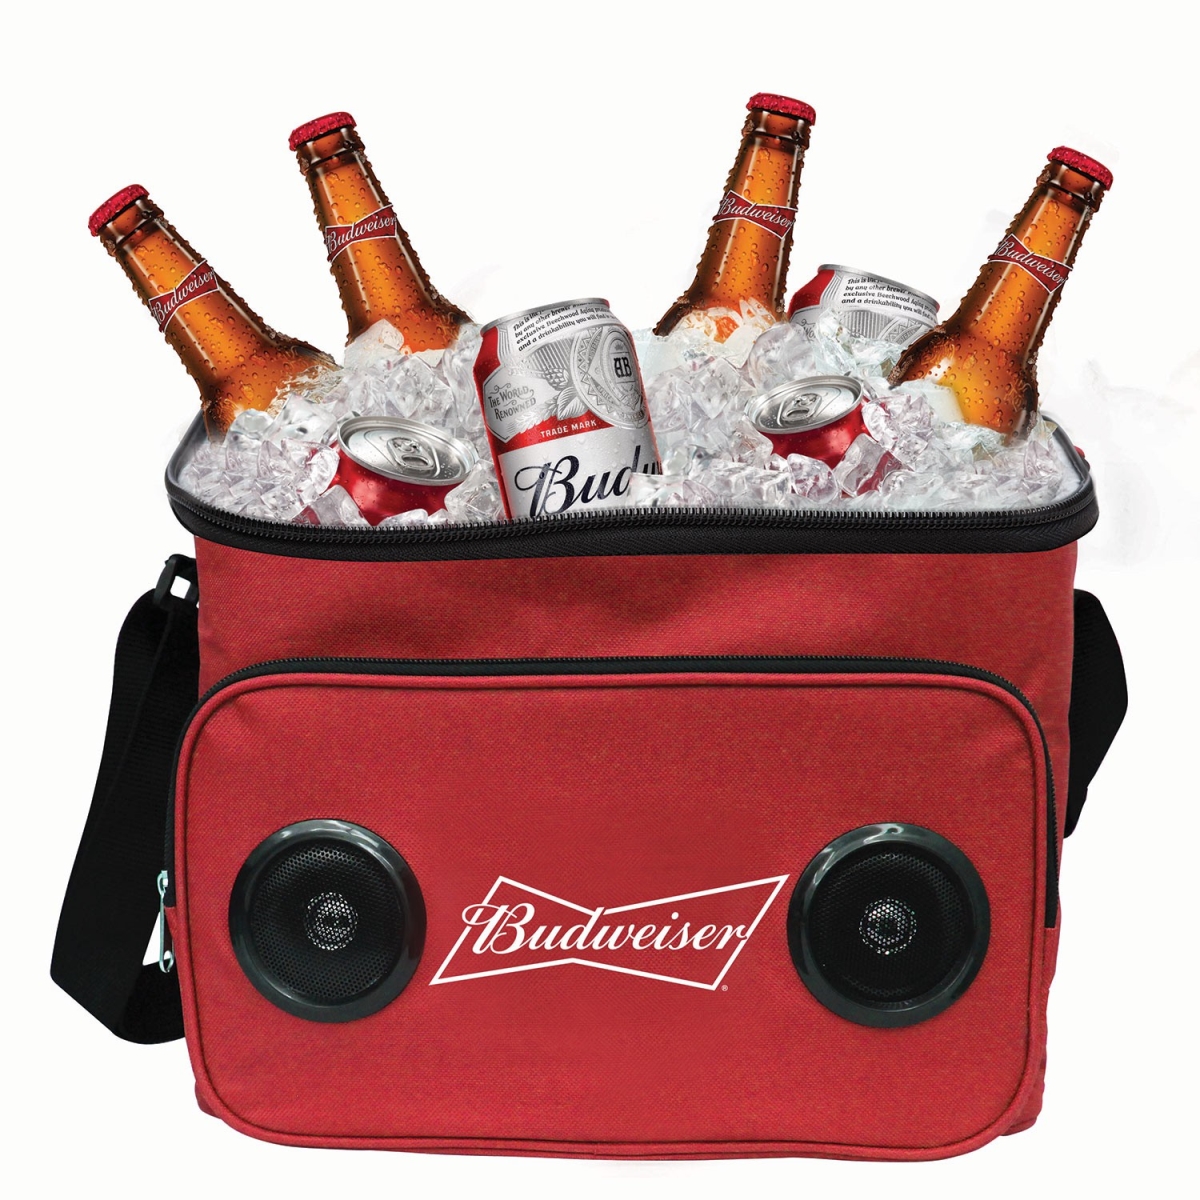 Picture of Budweiser 38896 Budweiser Bluetooth Speaker Cooler Bag